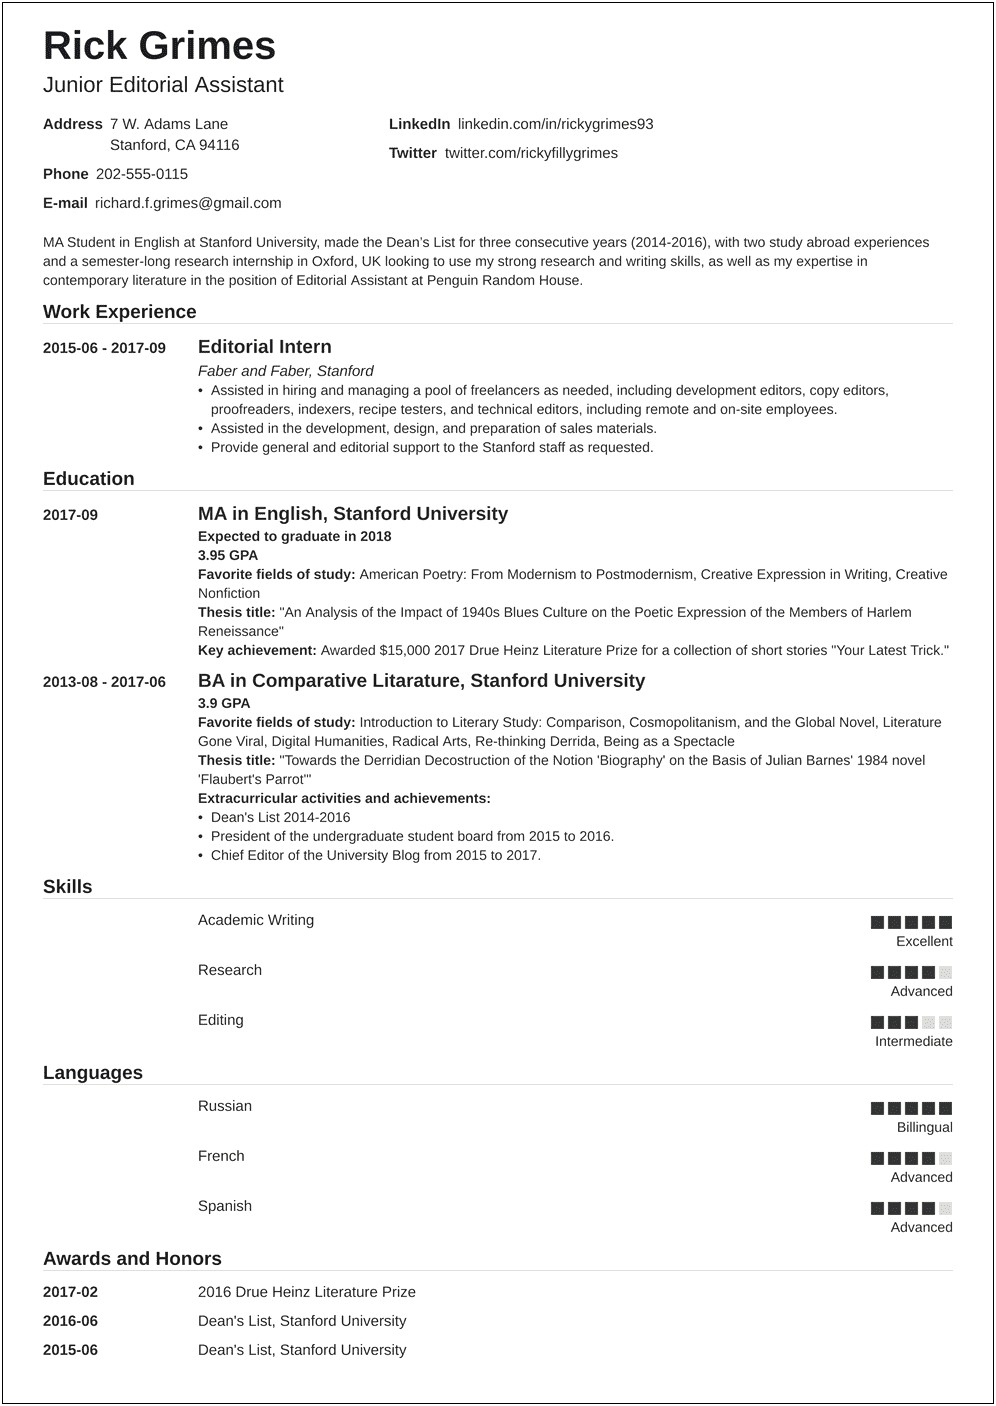 Resume Summarize Job Description Reddit